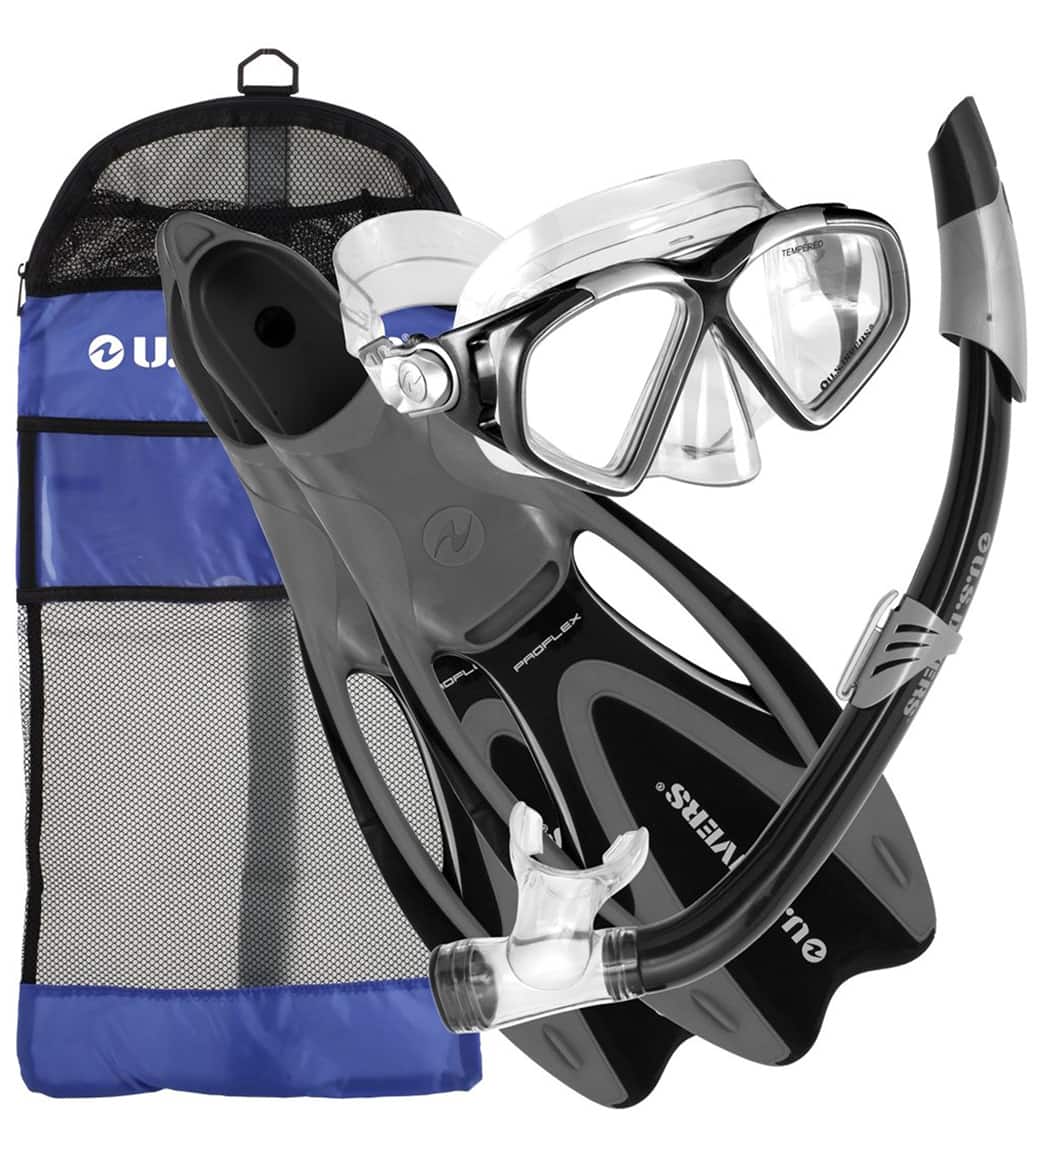 U.s. Divers Cozumel Mask/ Island Dry Snorkel/ Hingeflex Ii Fins/Gear Bag Set - Gunmetal/Black S/M 4-8.5 Size Small/Medium - Swimoutlet.com